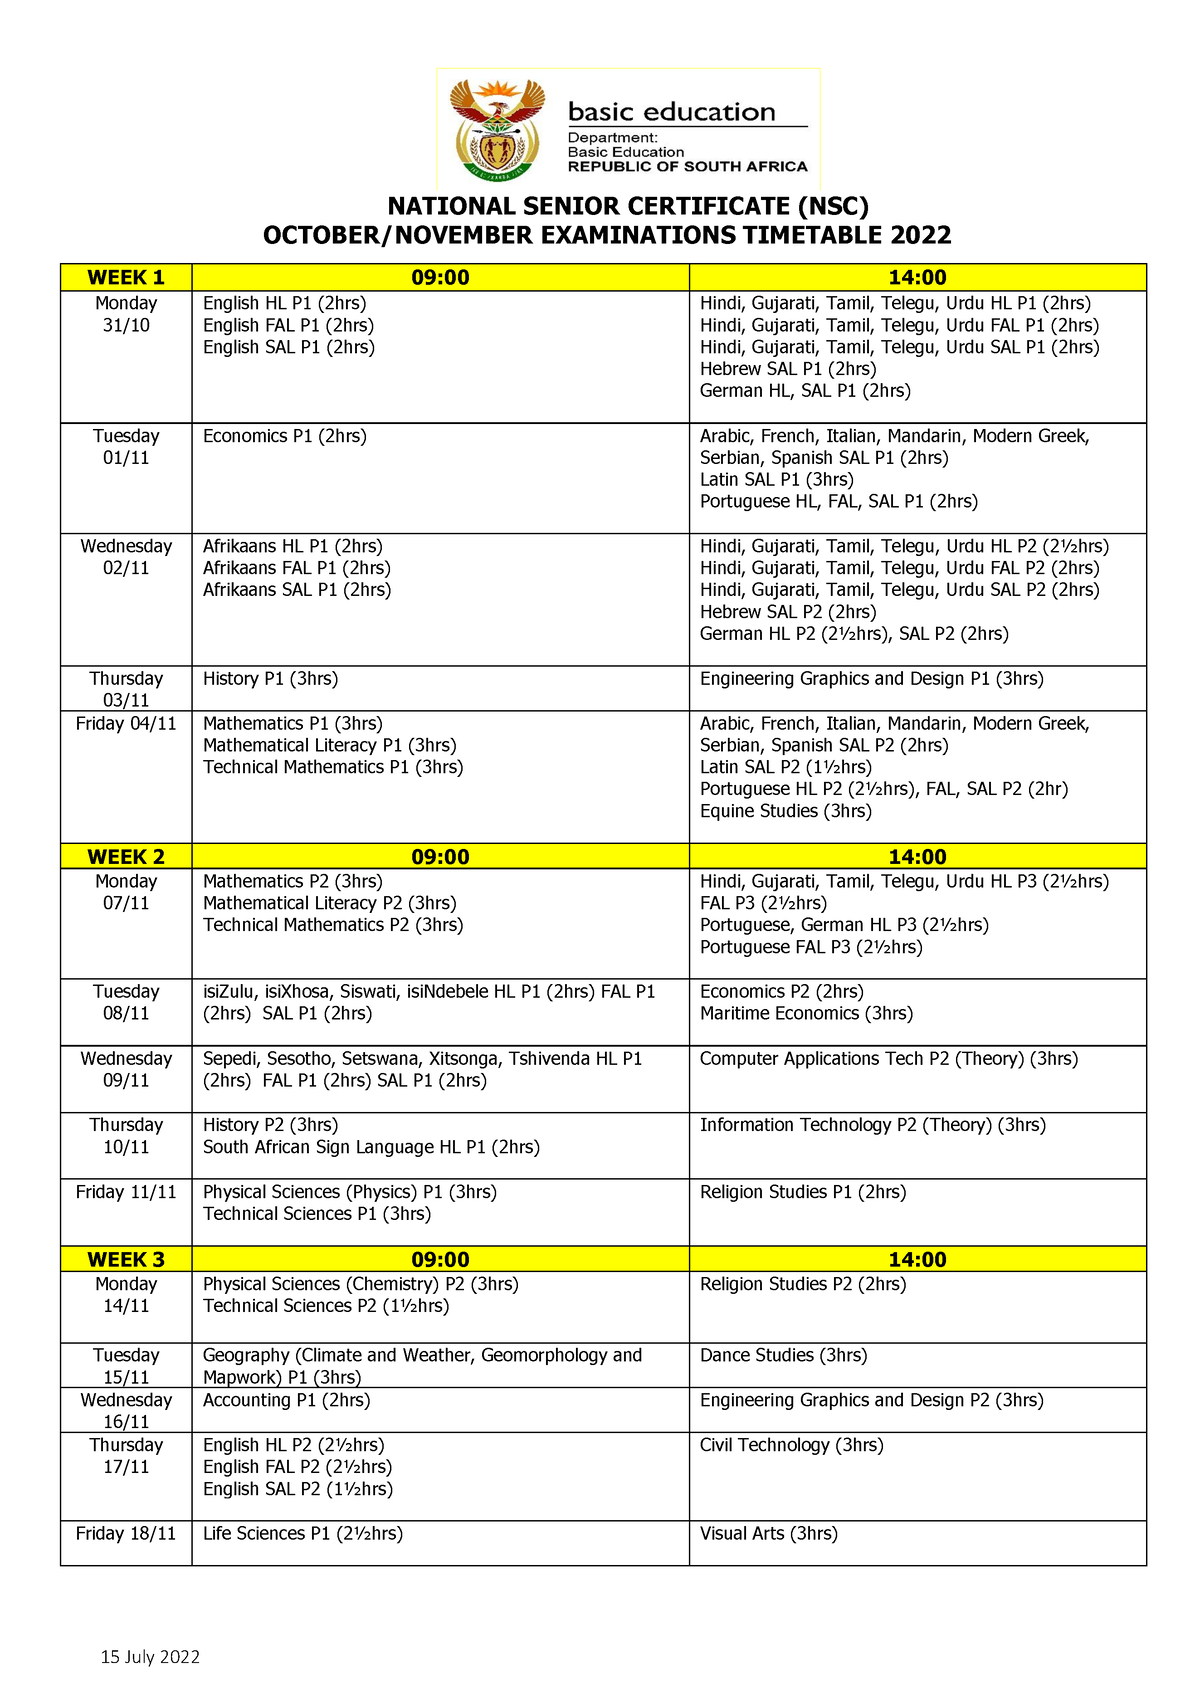 2022 Nov NSC timetable 15 July 2022 NATIONAL SENIOR CERTIFICATE (NSC